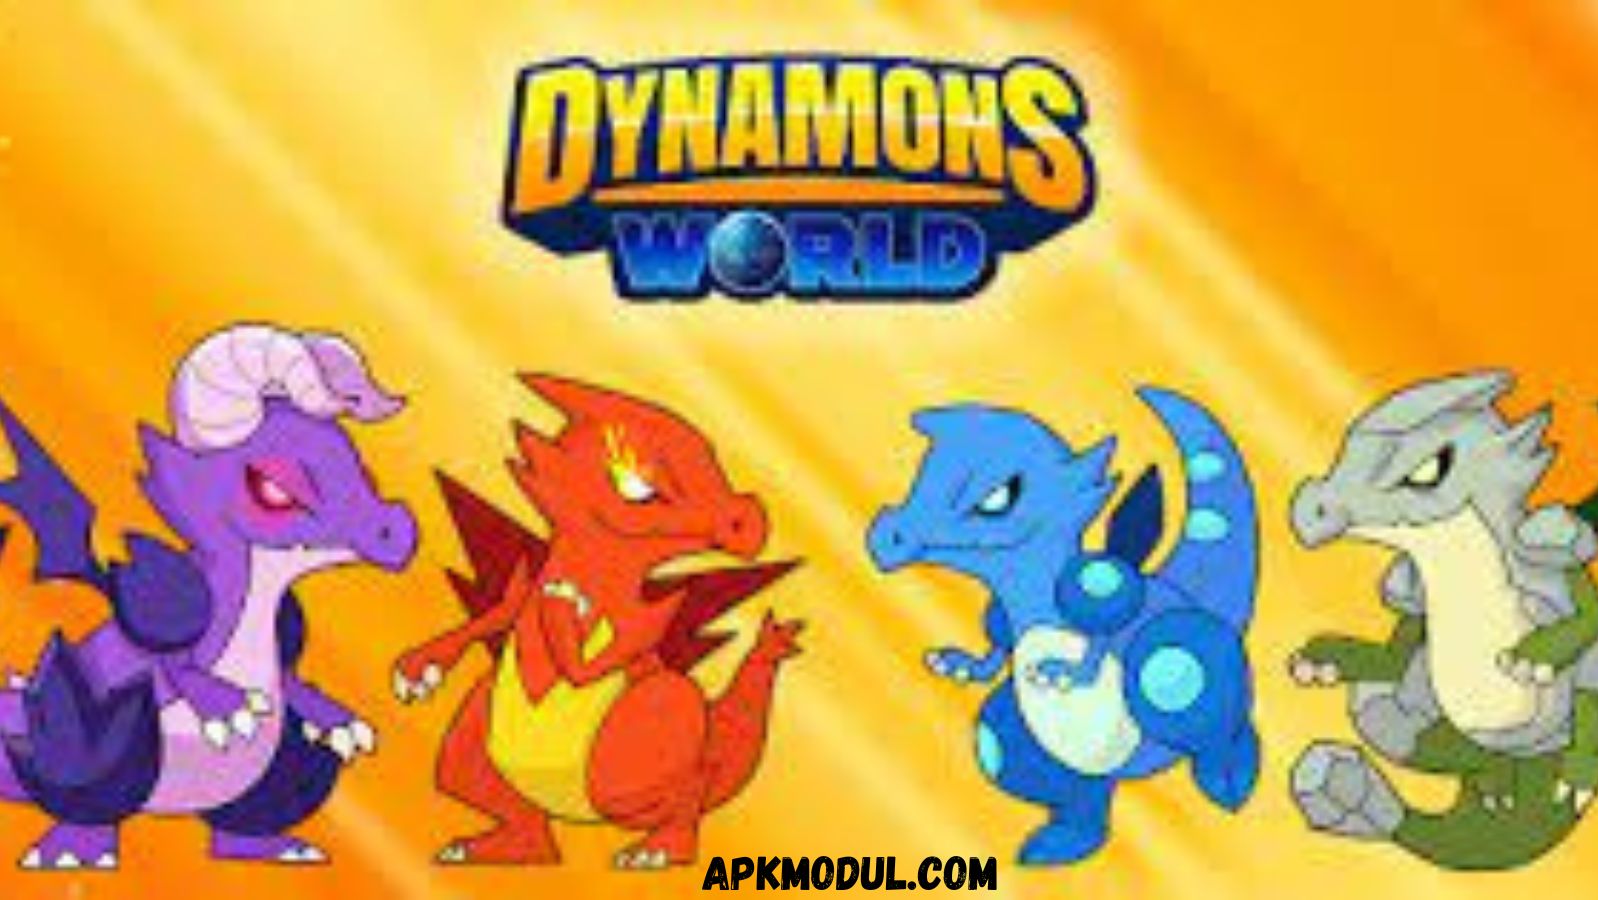 Dynamons World Mod APK